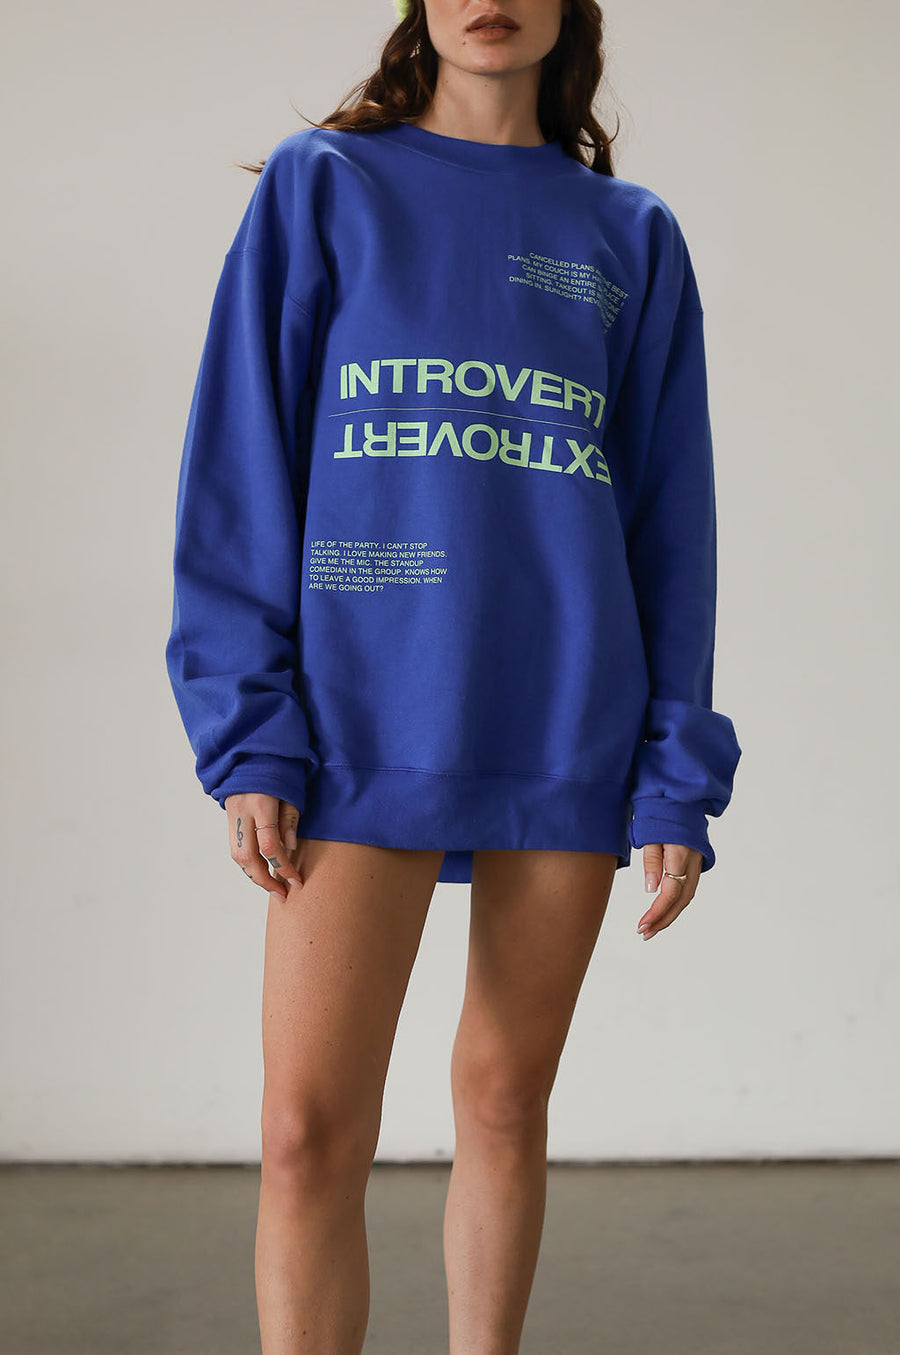 Introvert/Extrovert Sweater